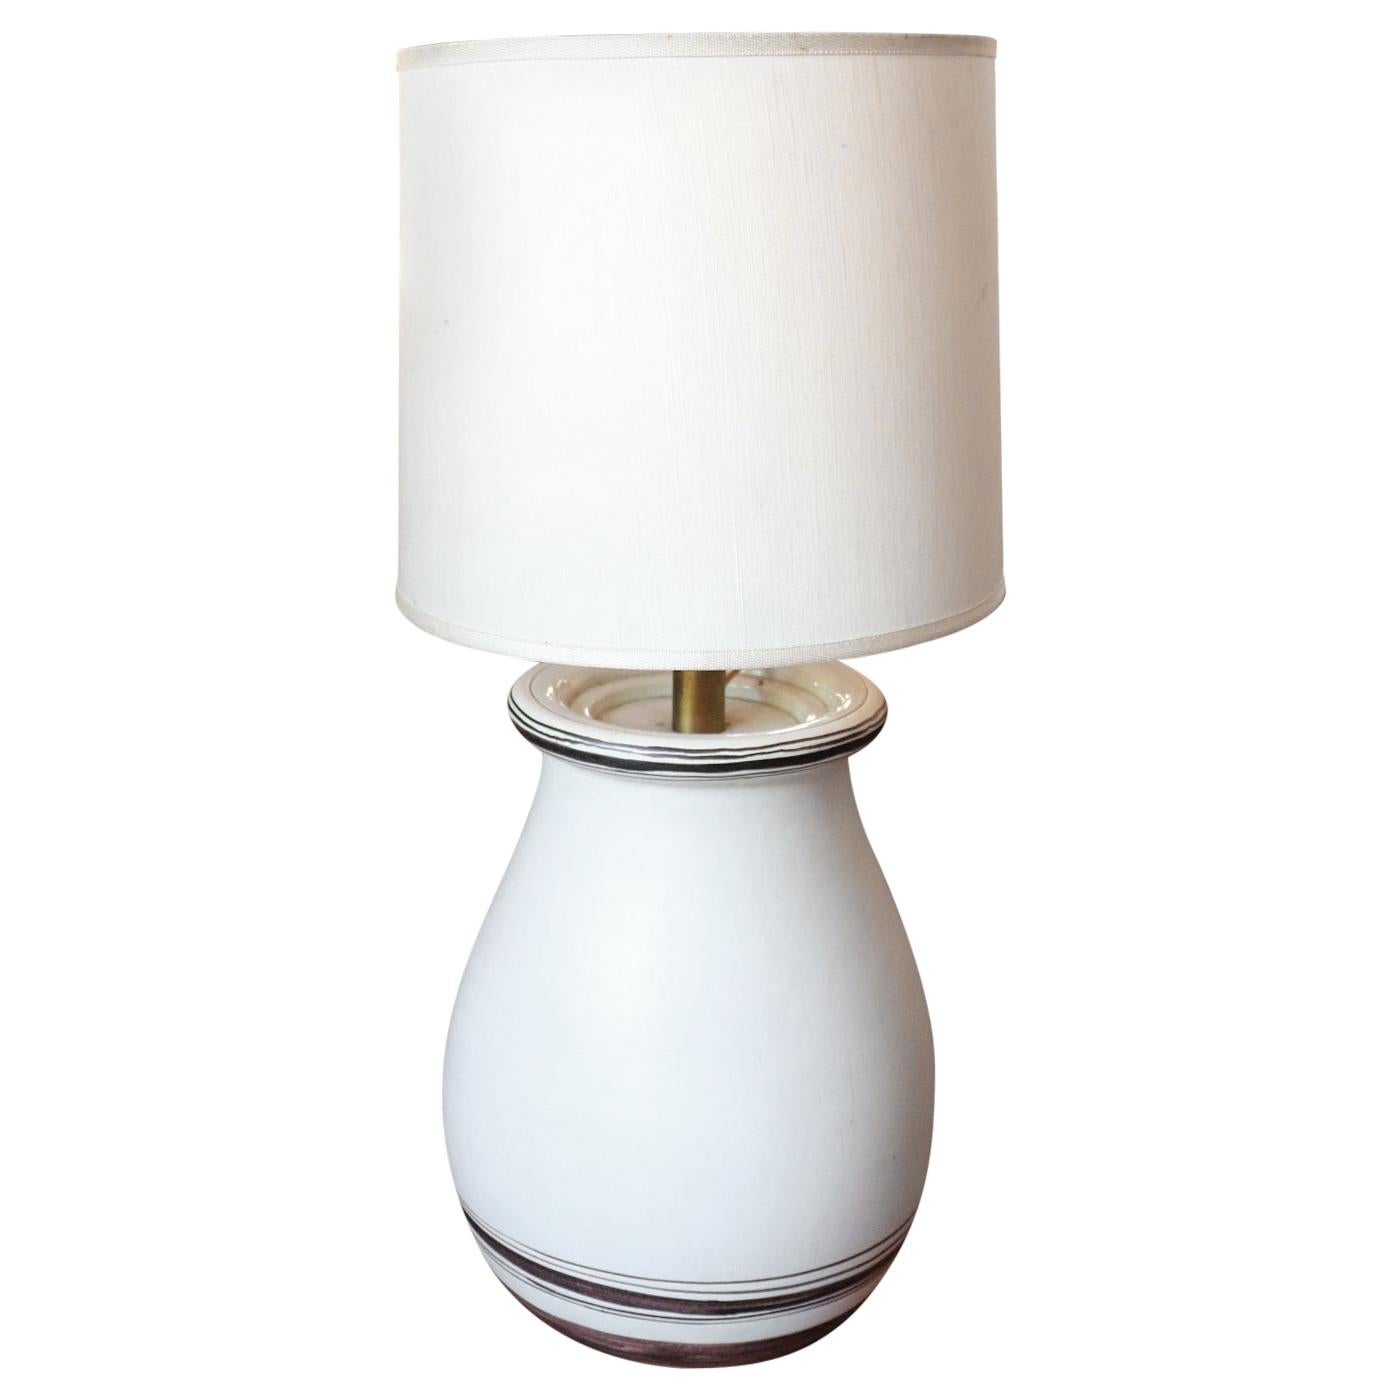 20th Century Italian Ceramic Table Lamp Signed Manufacture of Albisola